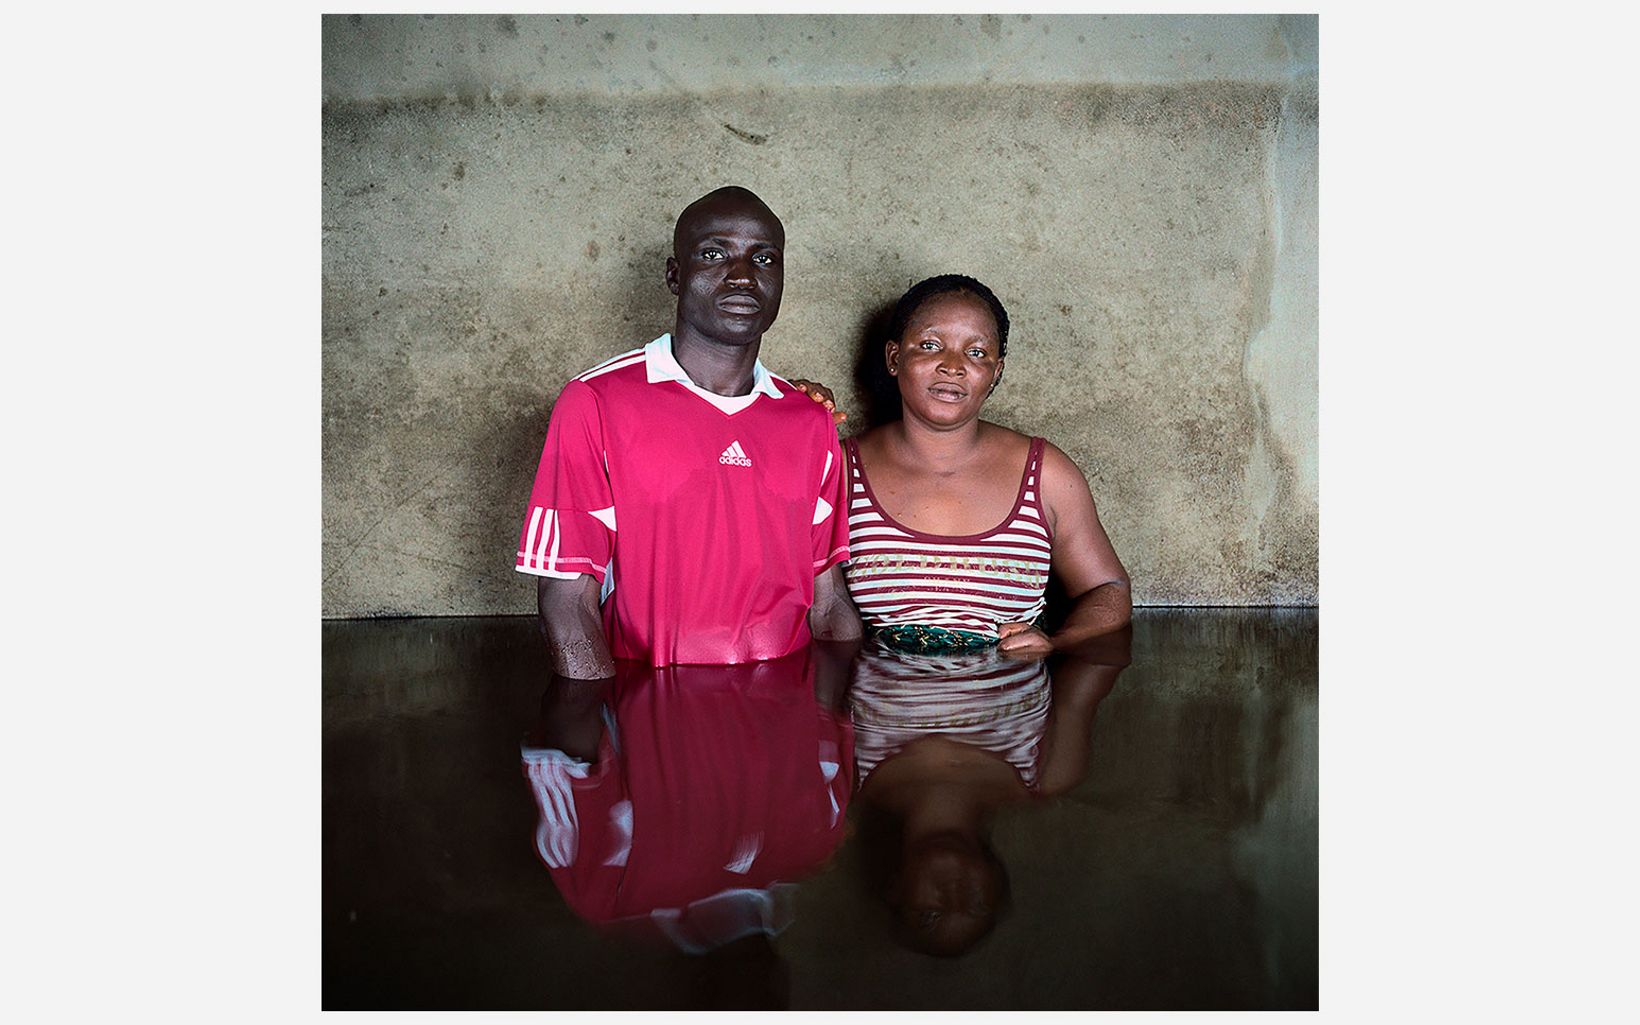 Kingsley Isiakpere/Edna Silas Igbogene, Bayelsa State, Nigeria, November 2012  © Gideon Mendel